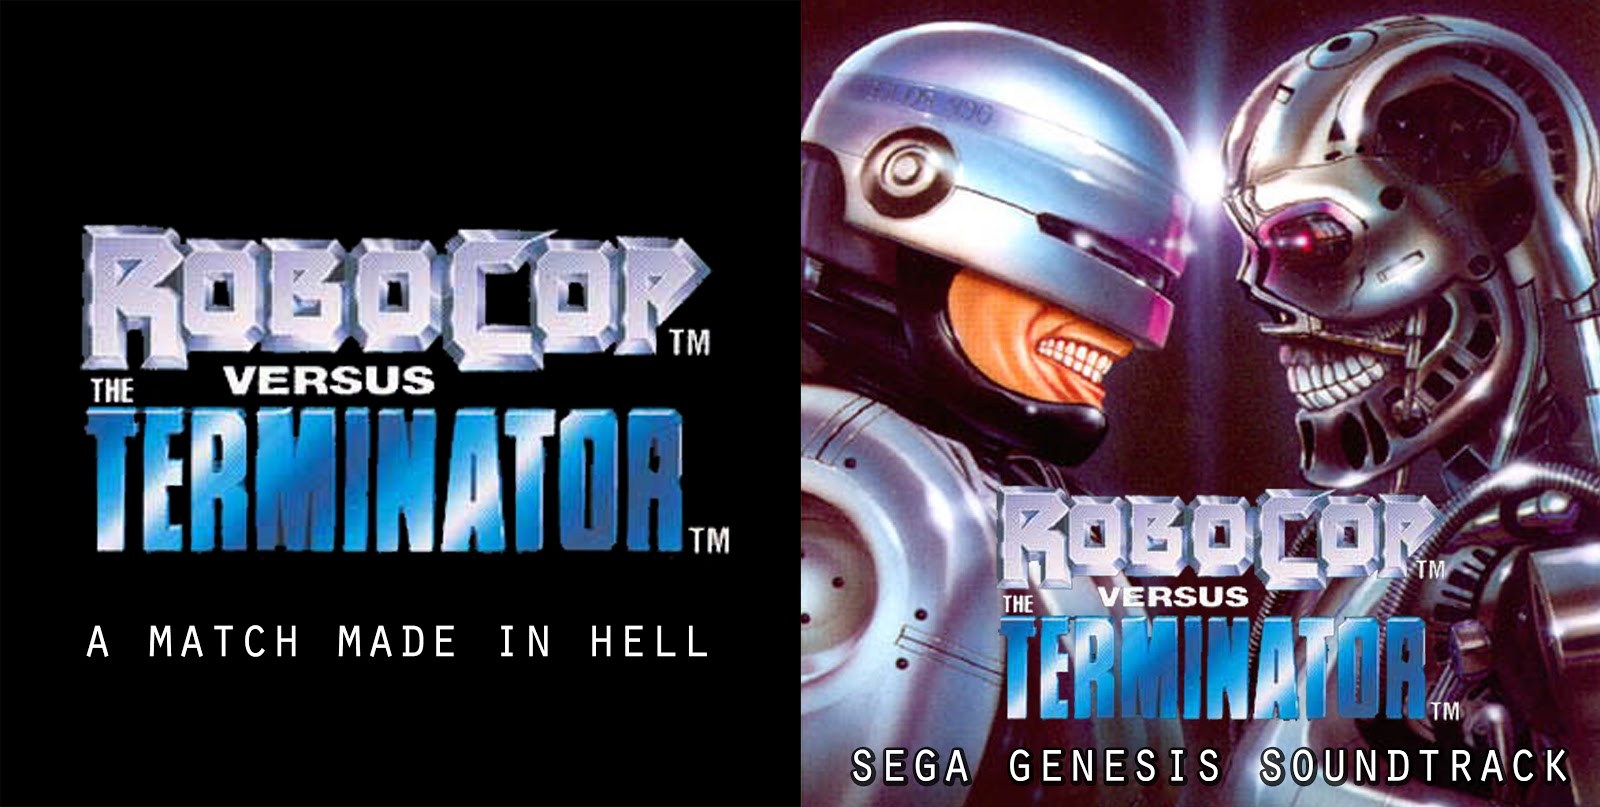 Robocop vs terminator. Робокоп против Терминатора Sega. Игра Sega: Robocop versus Terminator. Робокоп против Терминатора игра. Обложка Sega Genesis Robocop vs Terminator.